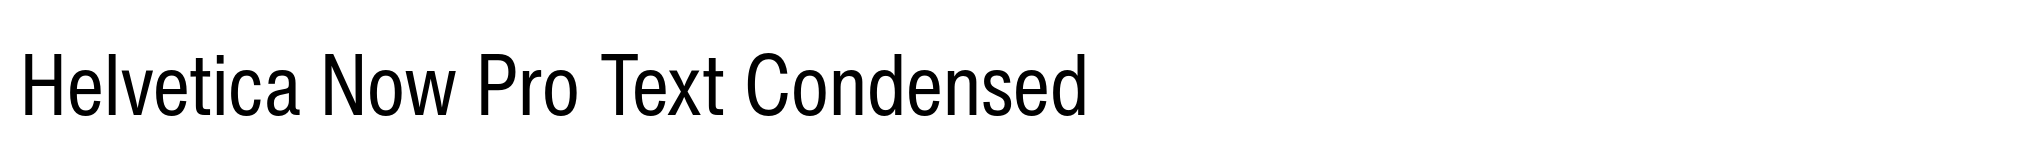 Helvetica Now Pro Text Condensed image